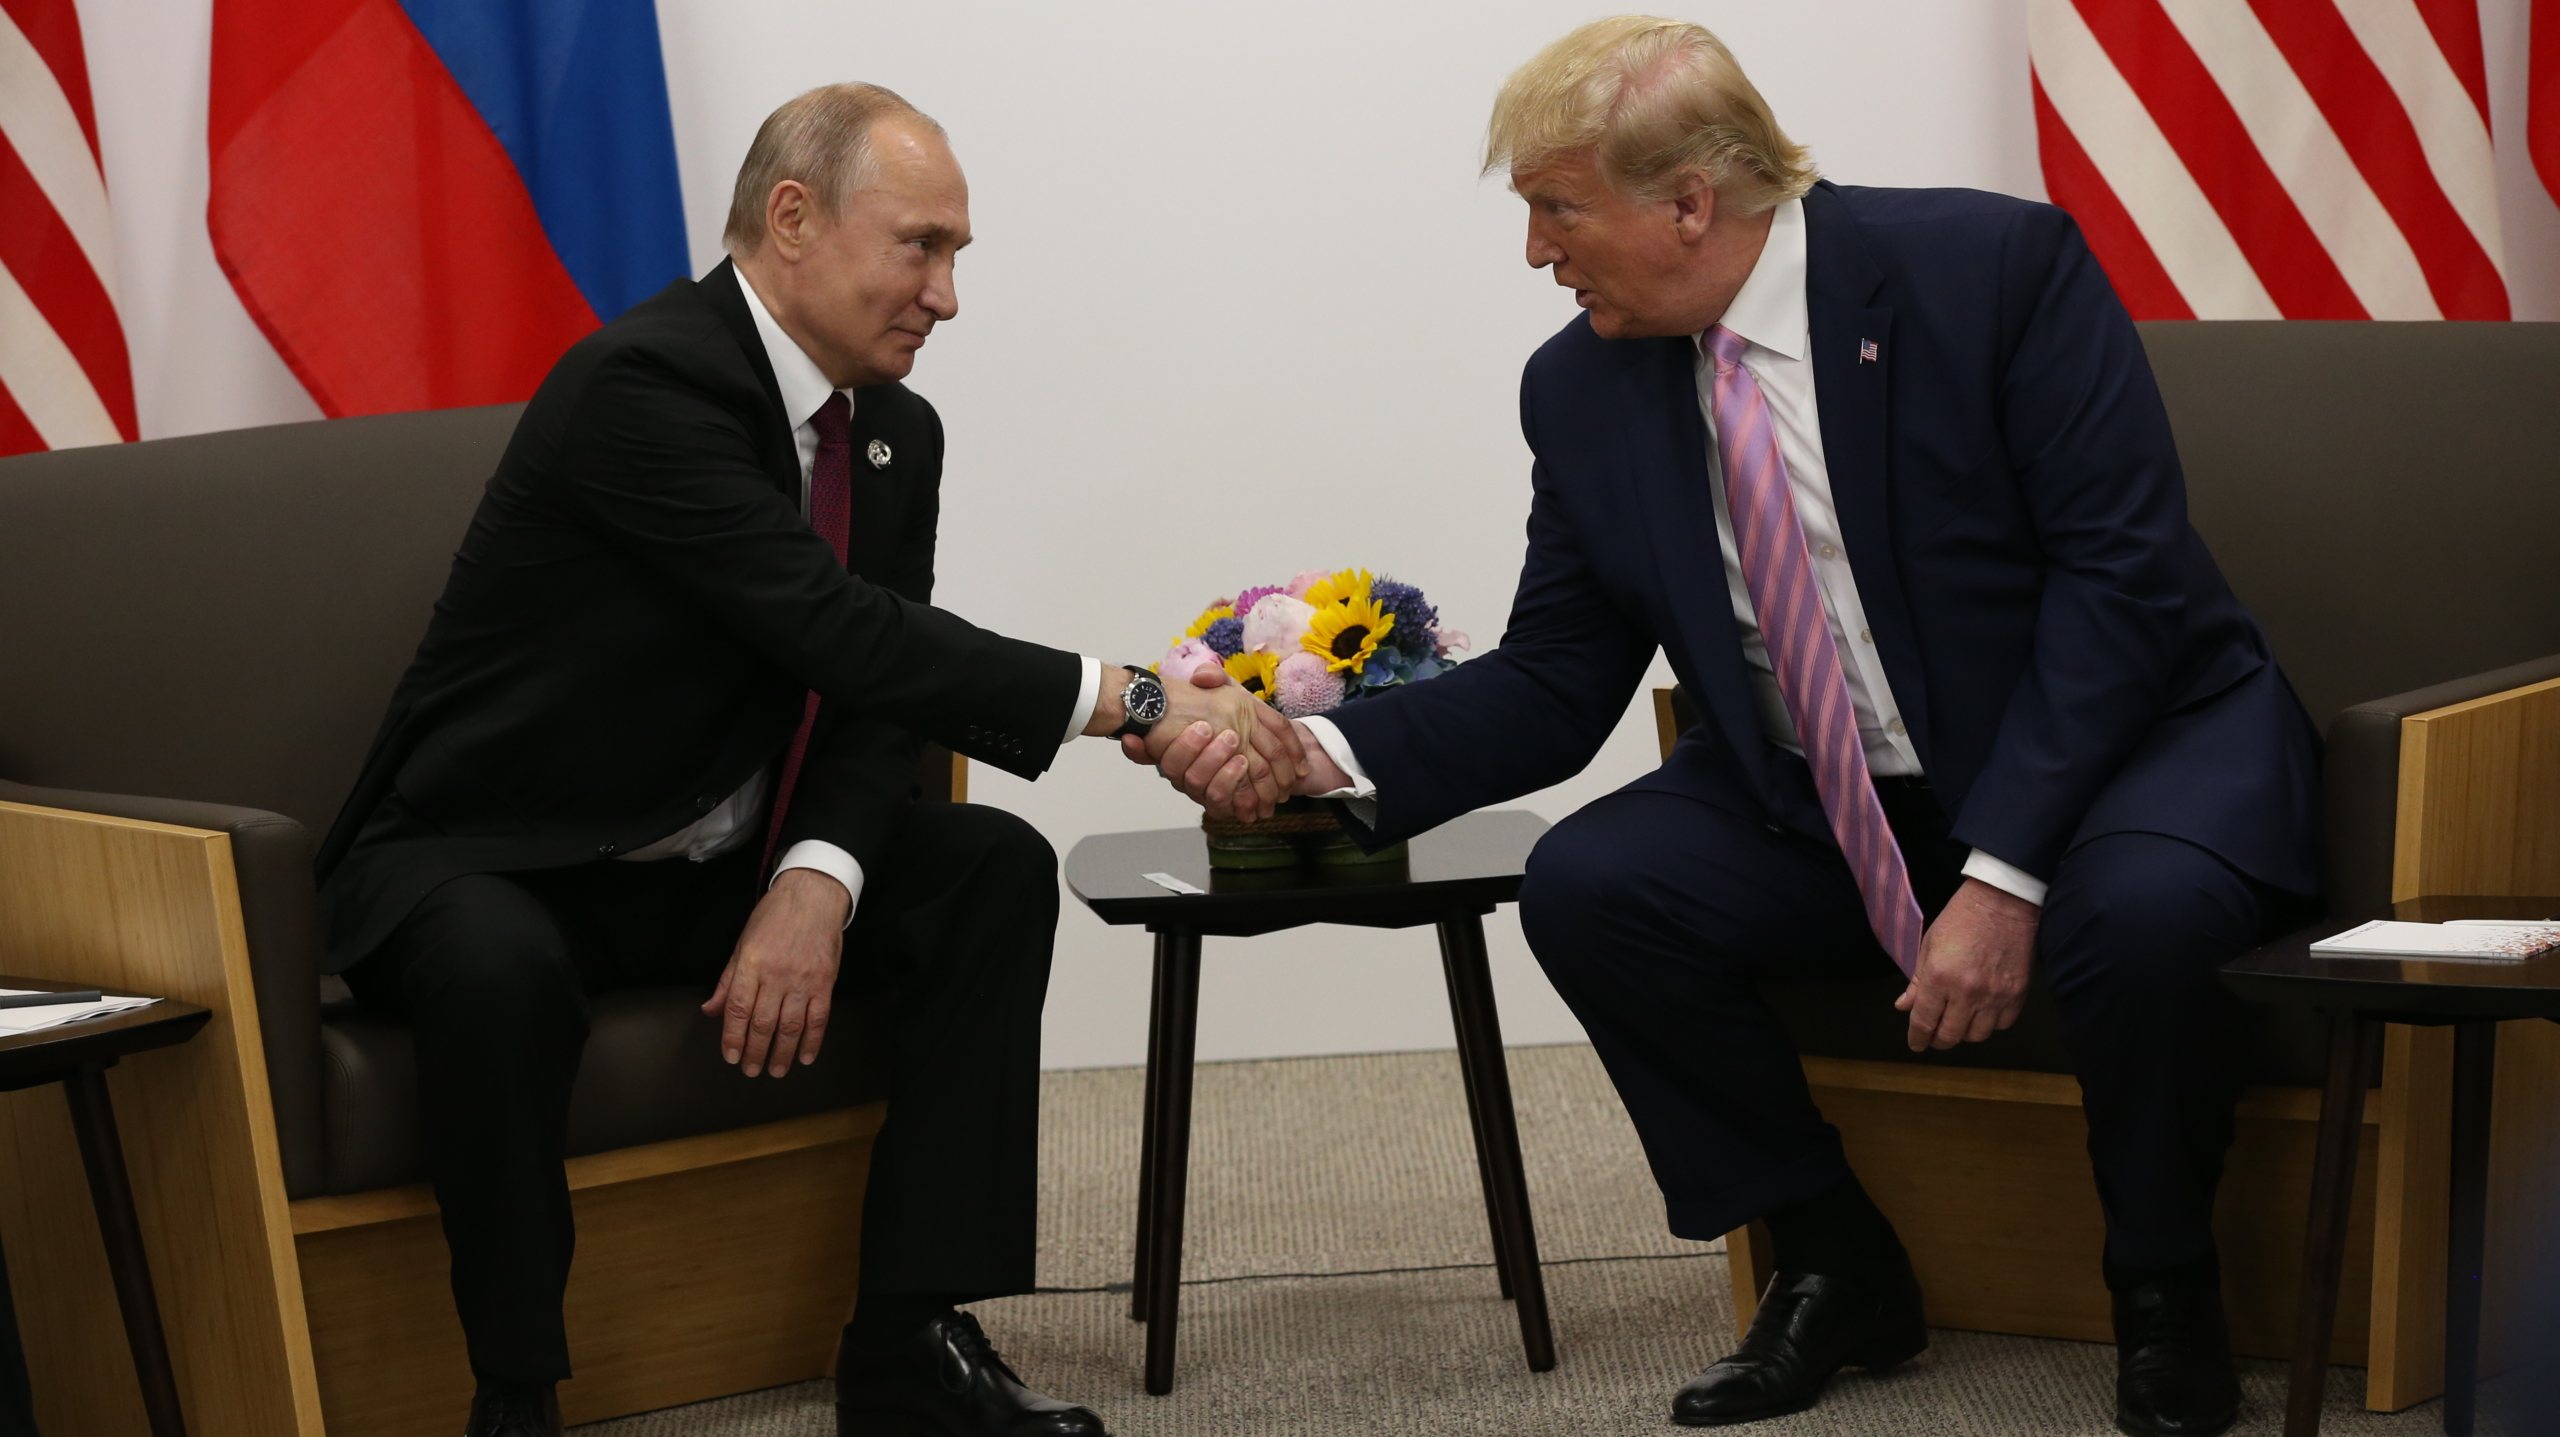 Russian President Vladimir Putin attends the G20 Osaka Summit 2019